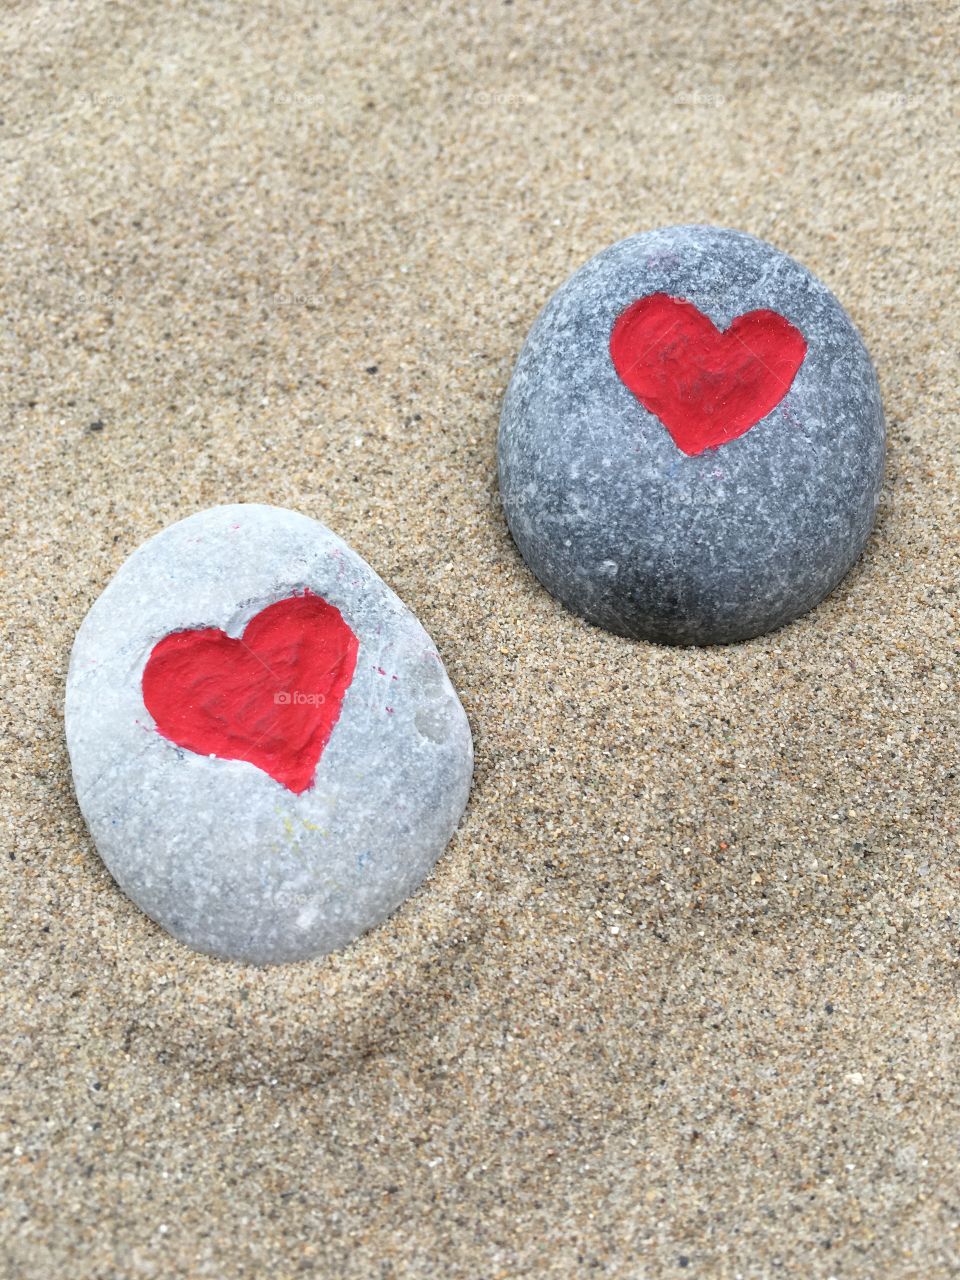 Heart shape on stone at beach